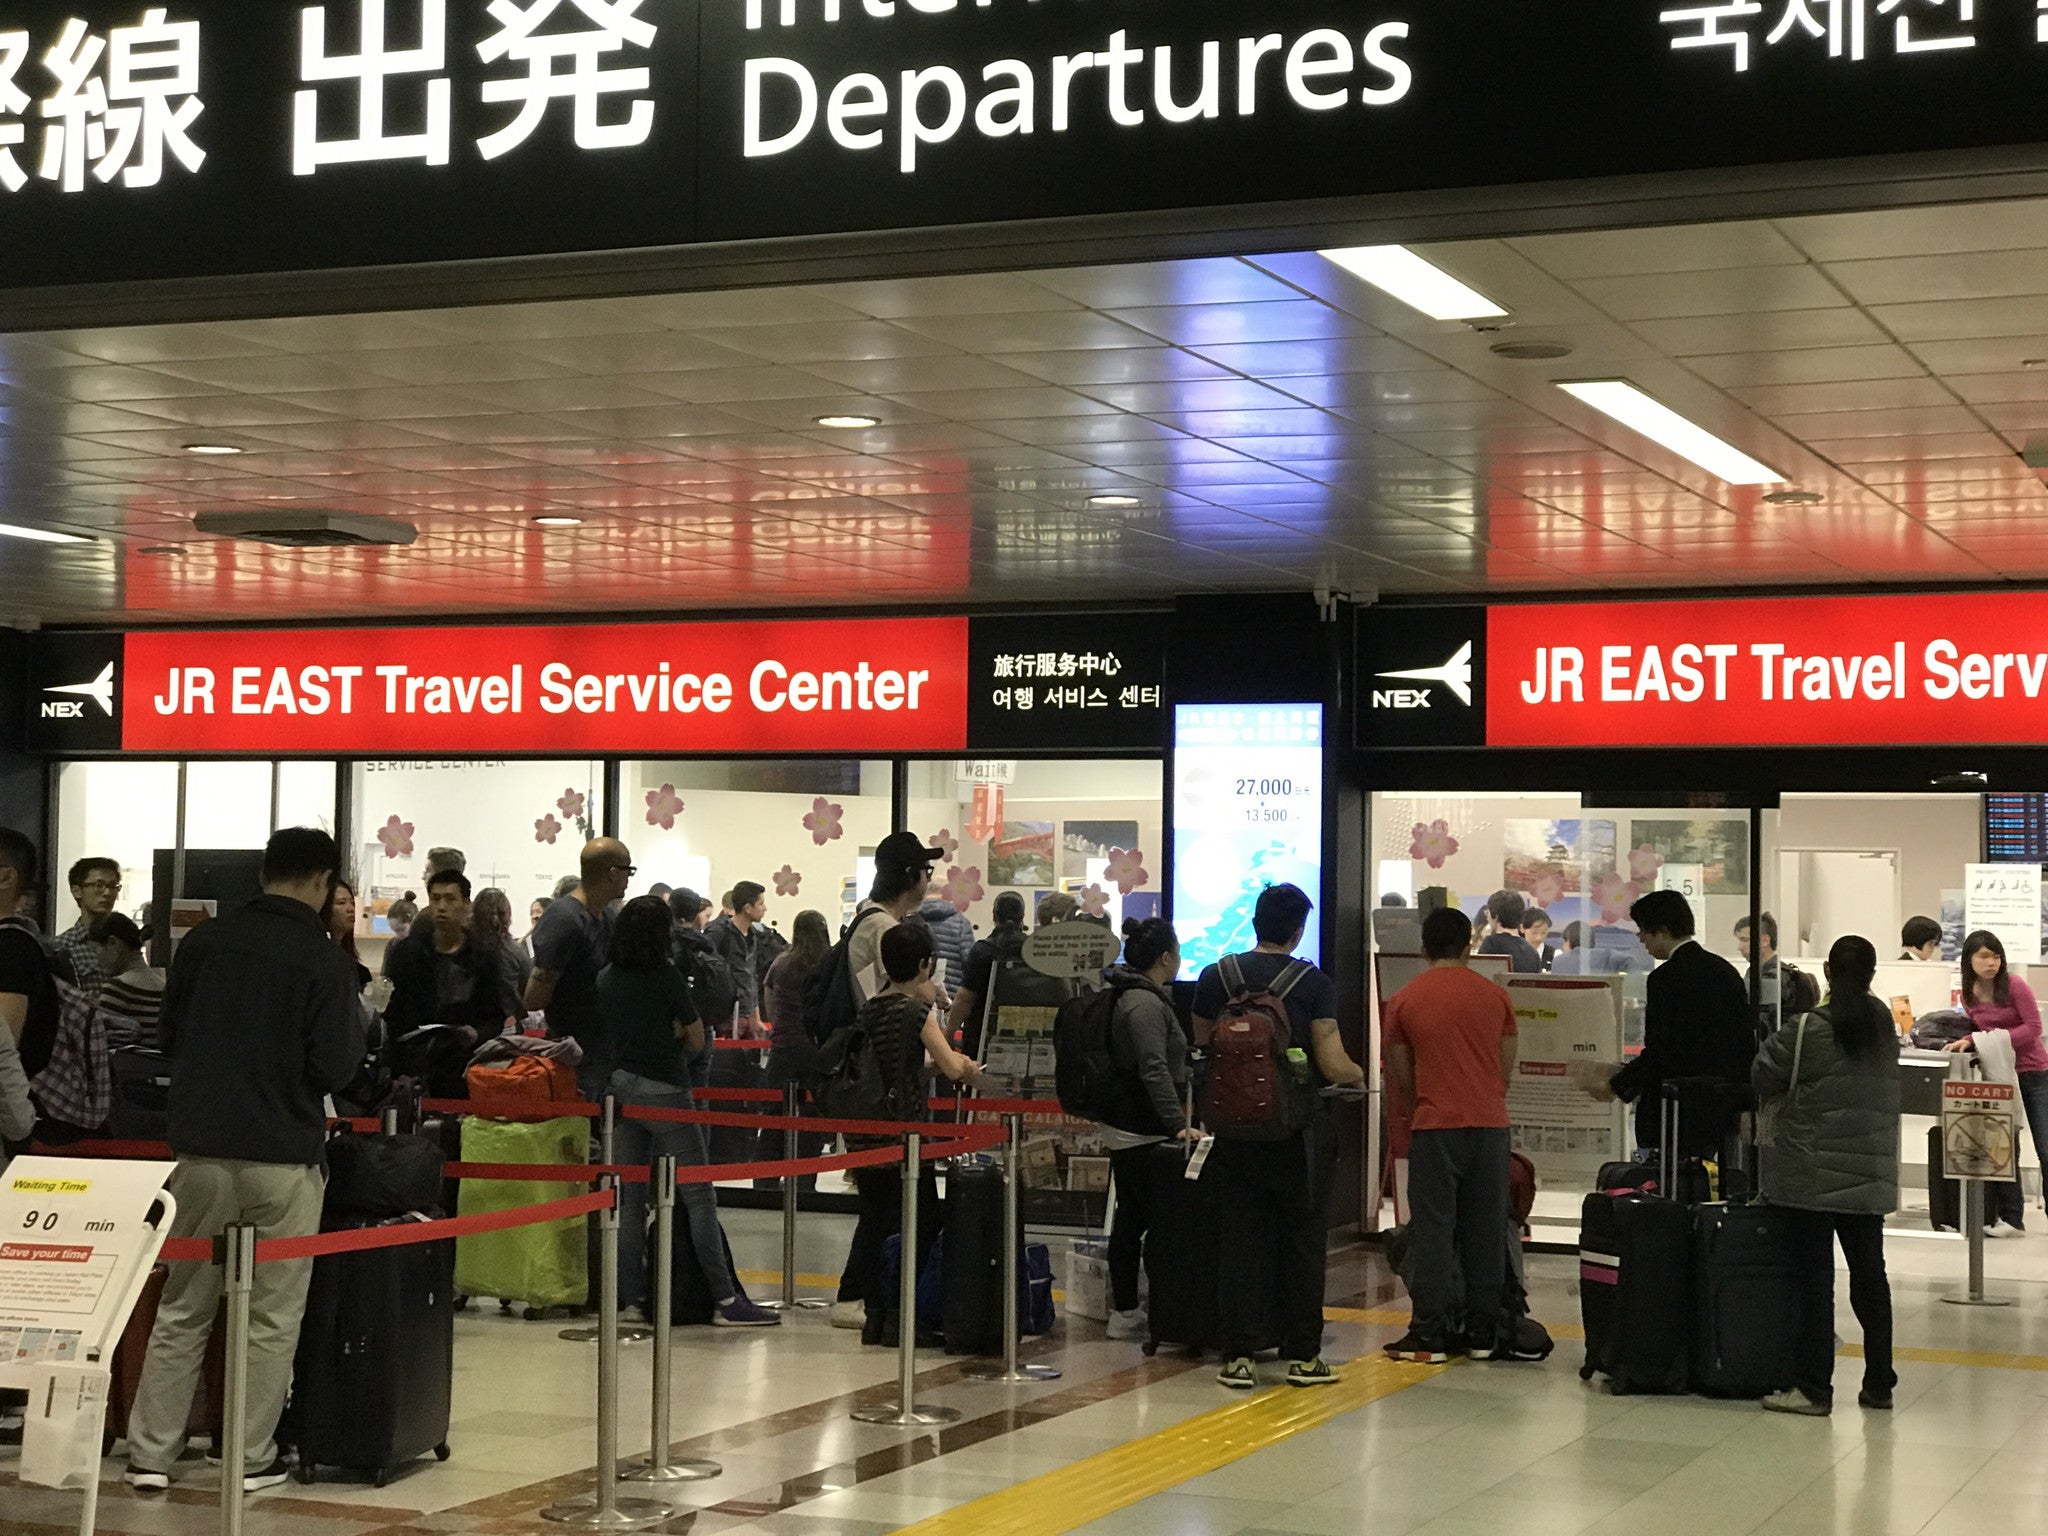 90-minute long line at JR EAST Travel Service Center at Narita Airport to obtain Japan Rail Pass